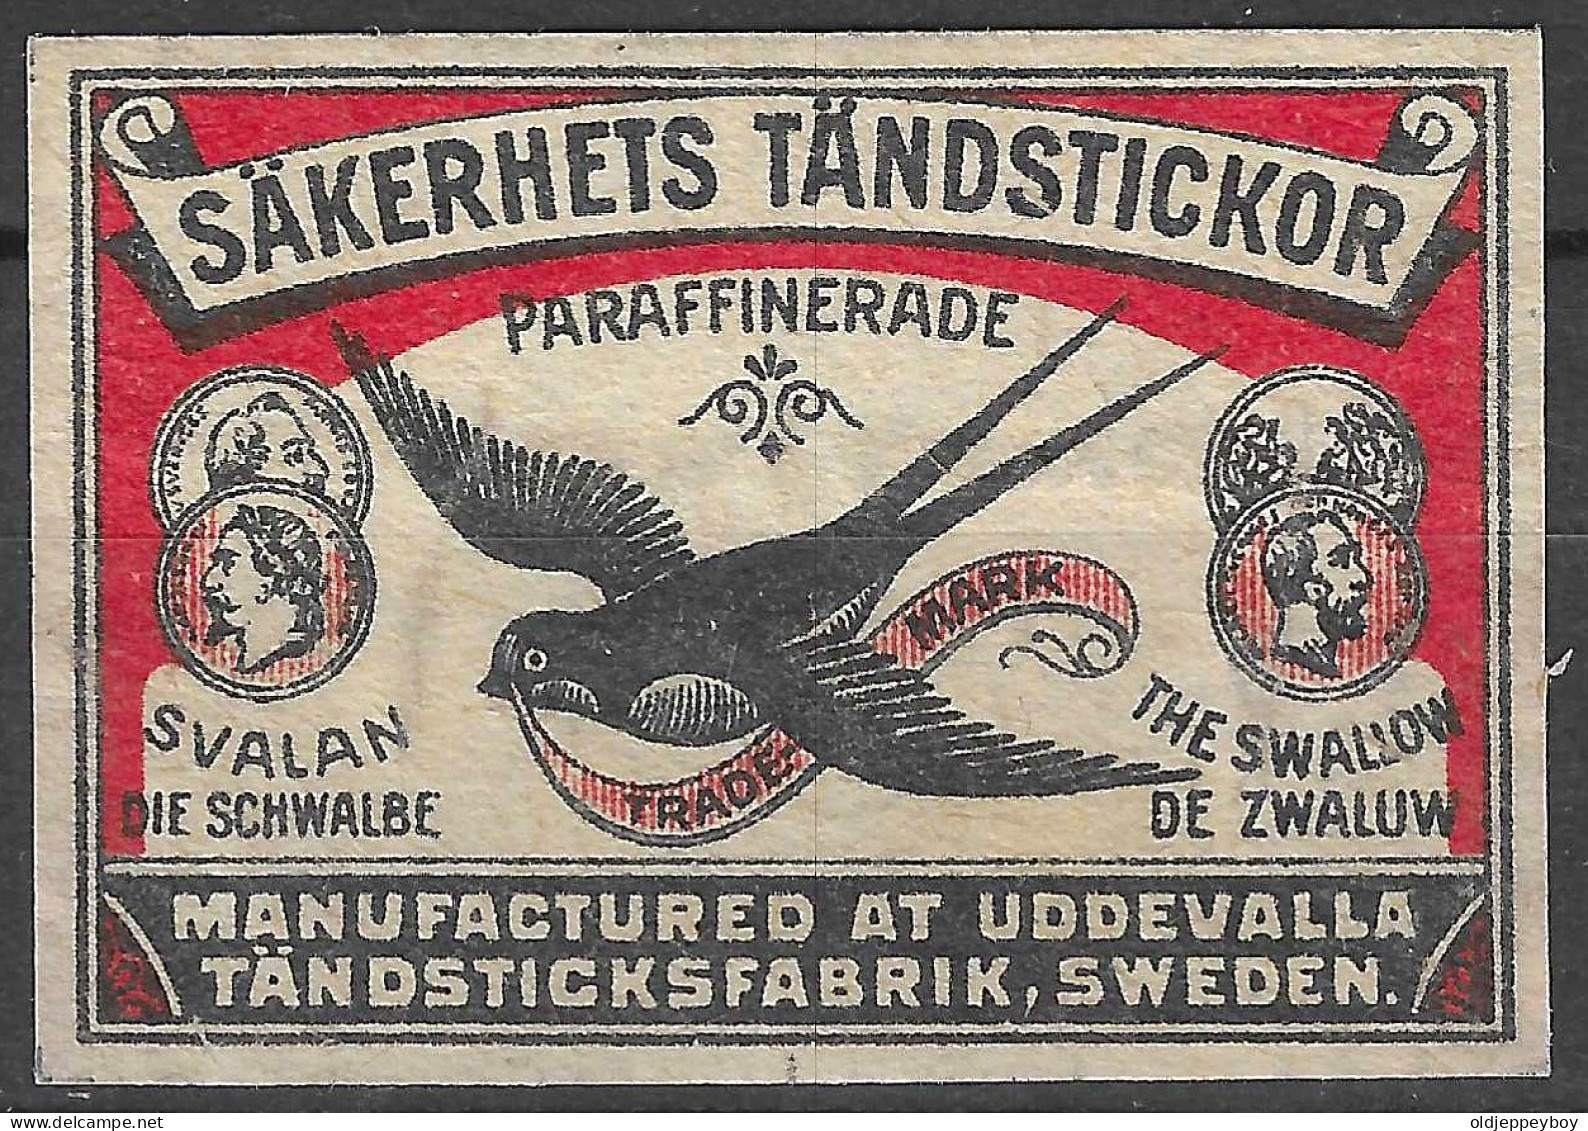 MADE AT UDDEVALLA TANDSTICKSFABRIK SWEDEN VINTAGE Phillumeny MATCHBOX LABELSAKERHETS TANDSTICKOR THE SWALLOW DE ZWALUW - Boites D'allumettes - Etiquettes